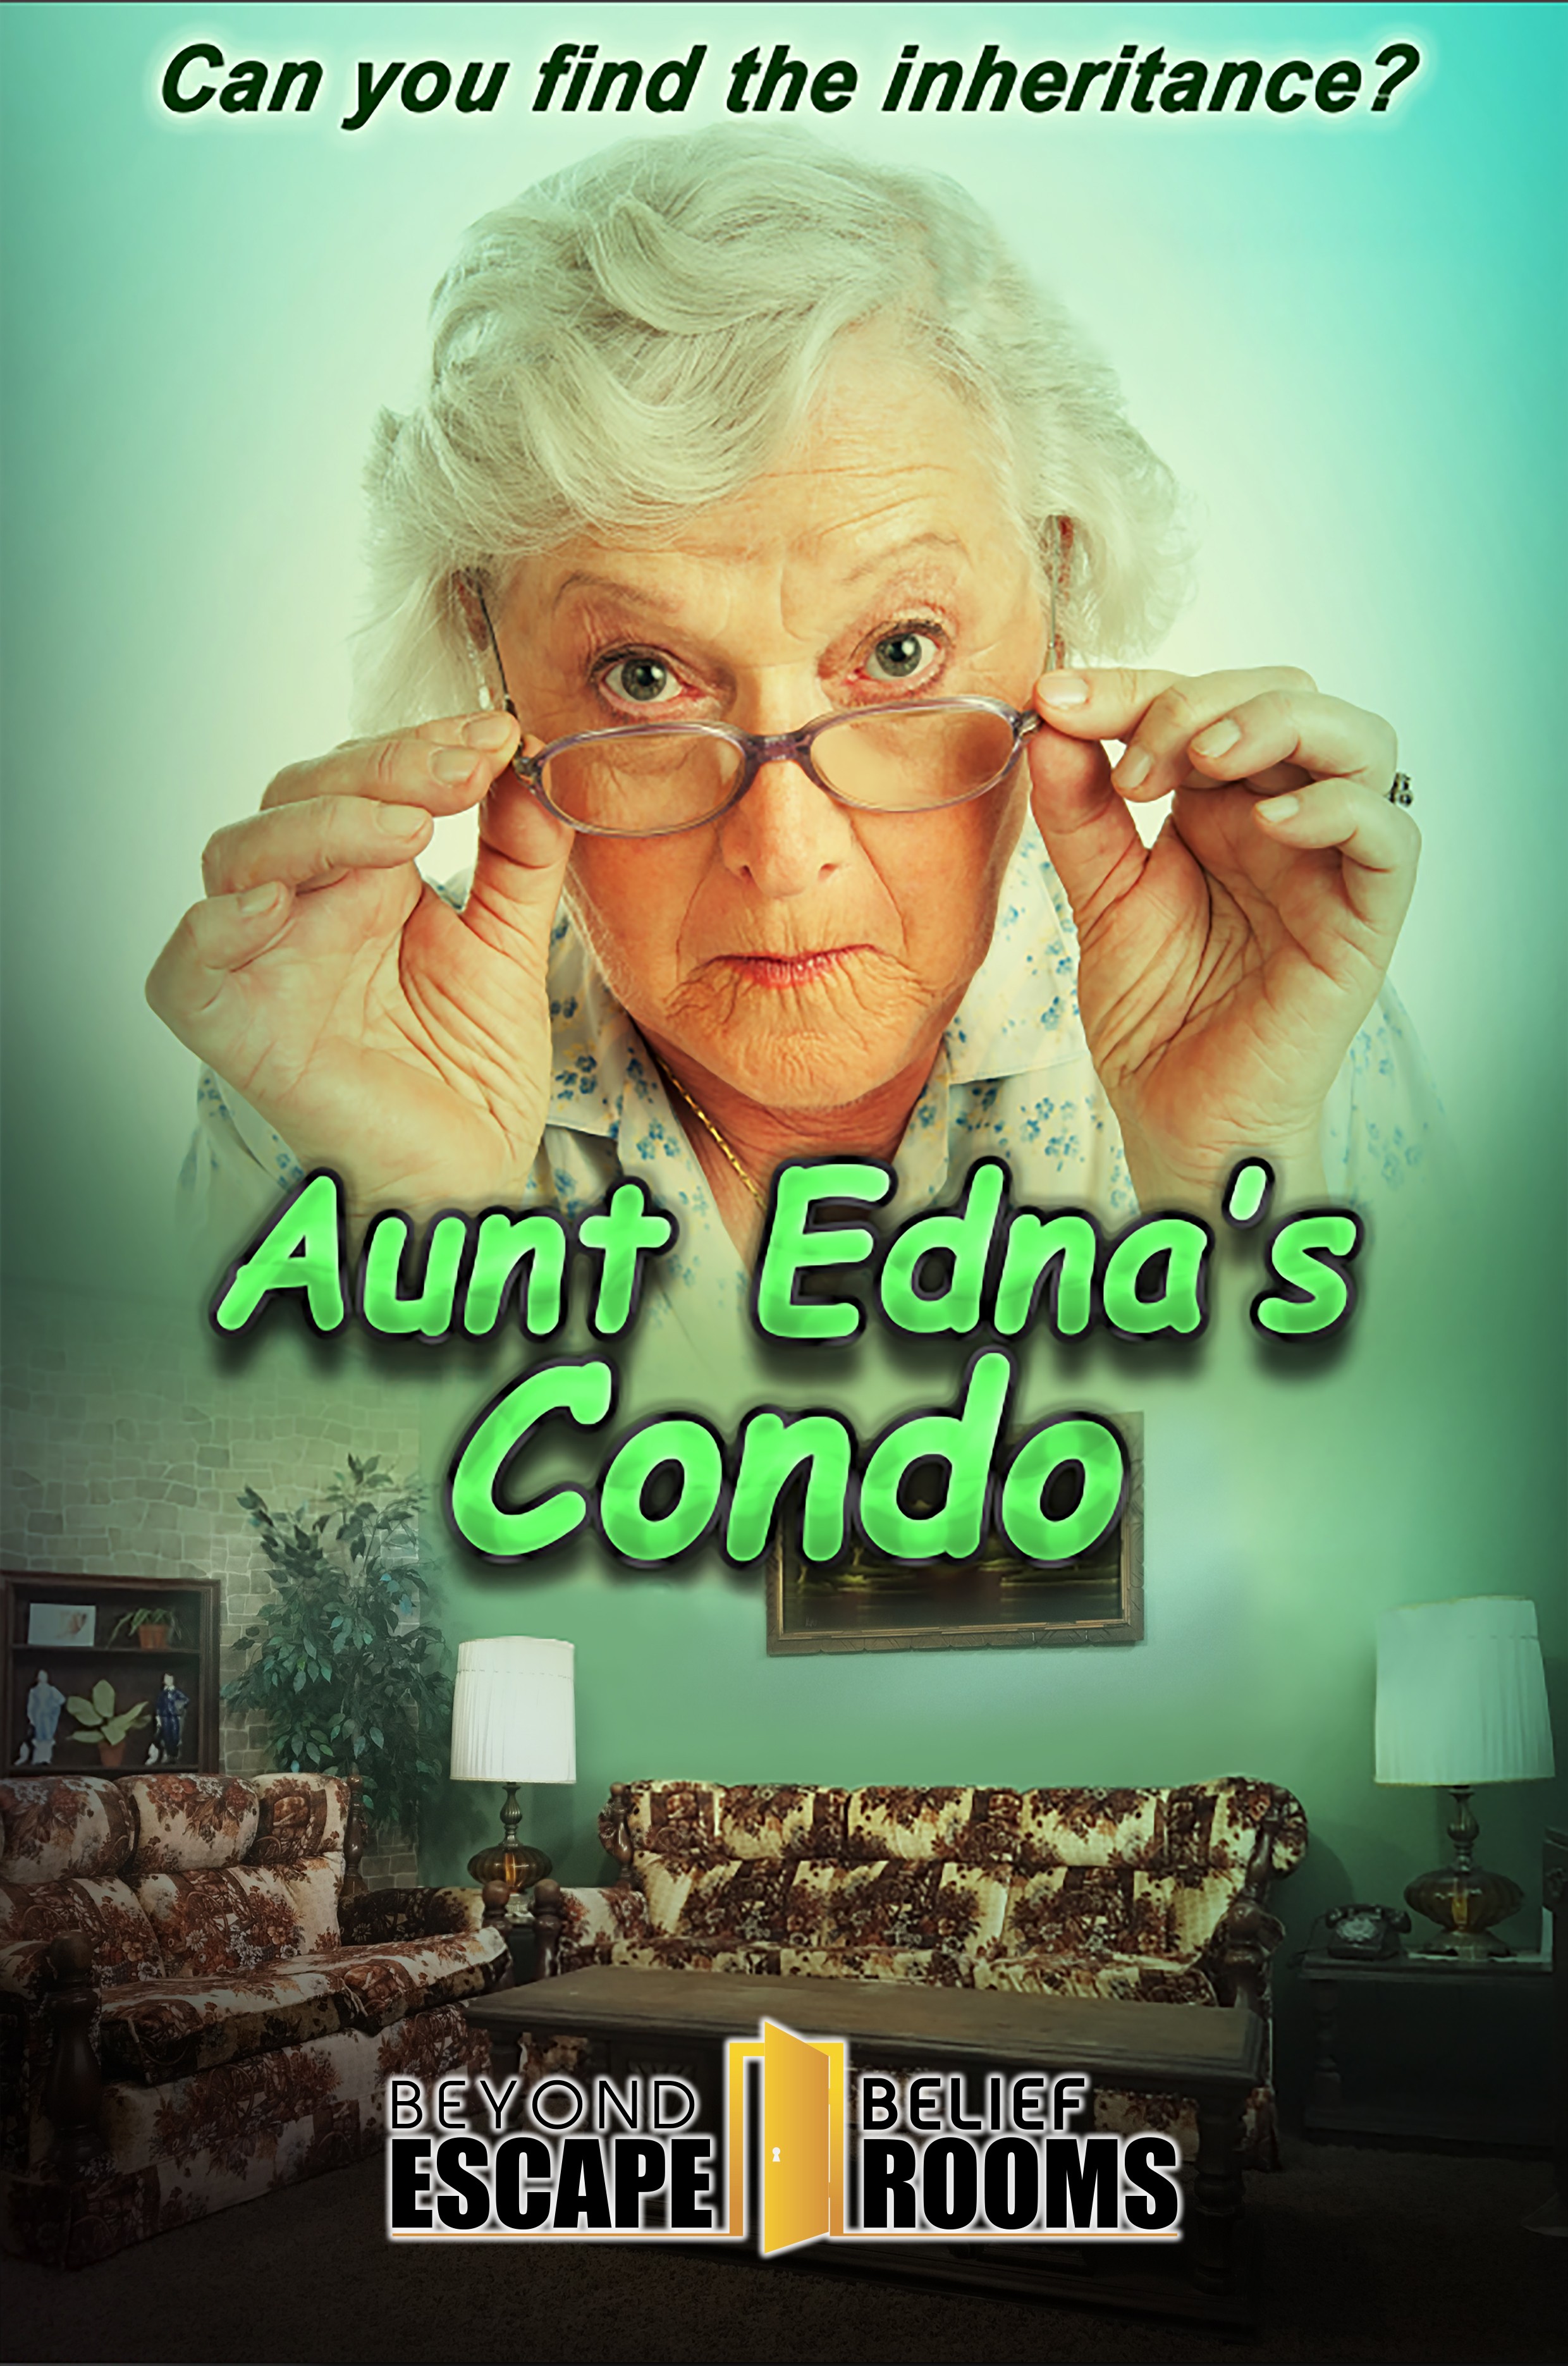 Aunt_Ednas_Condo_-_Trailer_Poster_JPEG_edited